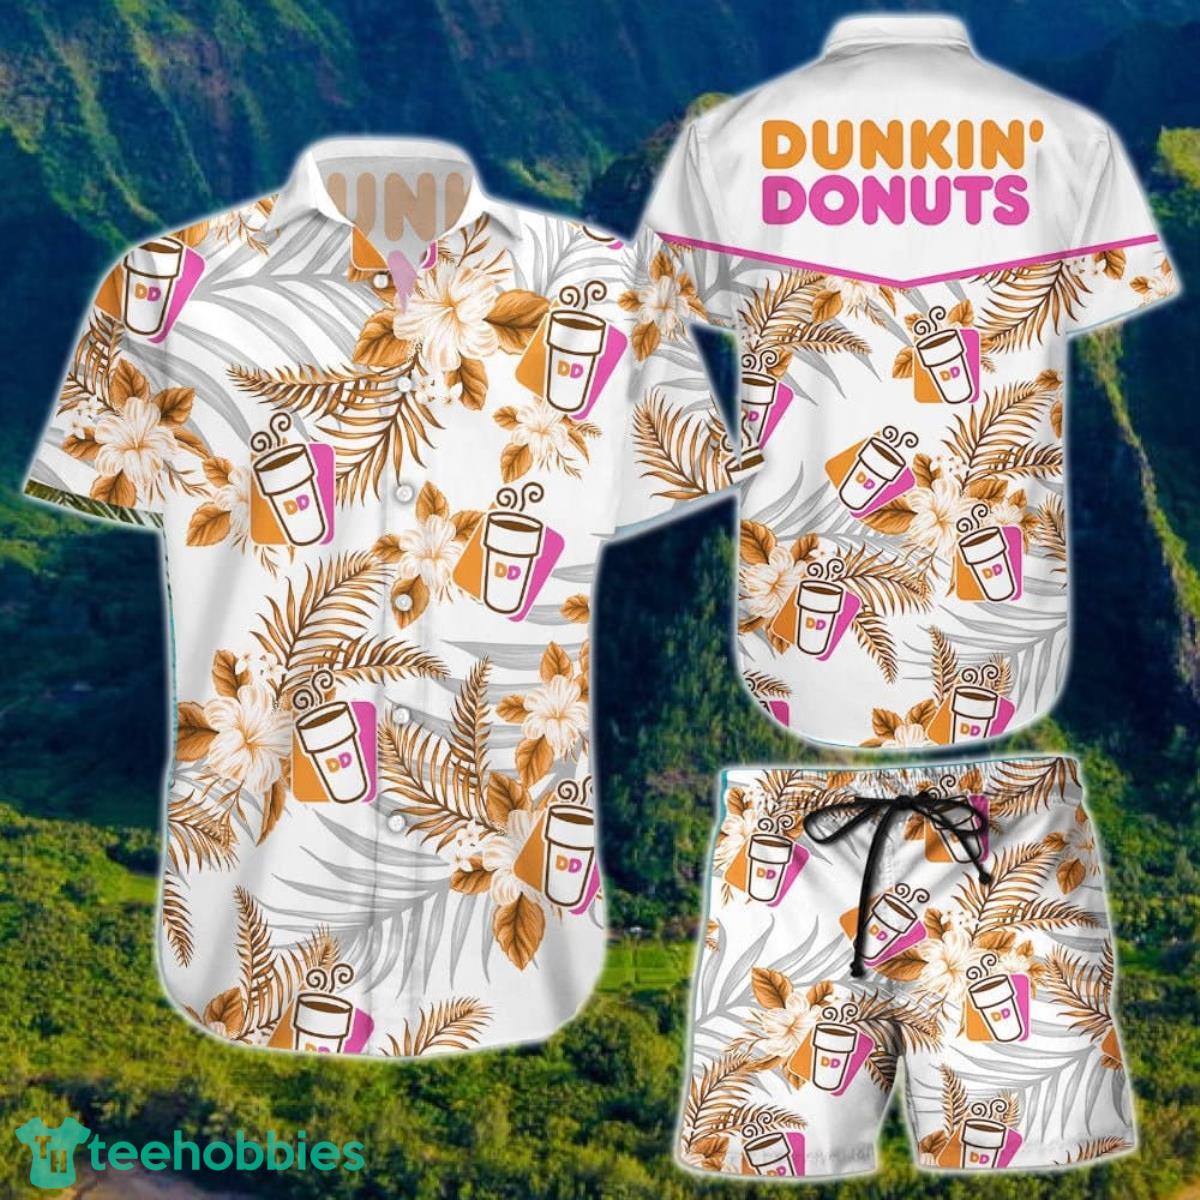 Dunkin' donuts Tropical Flower Aloha Hawaiian Shirts Product Photo 1